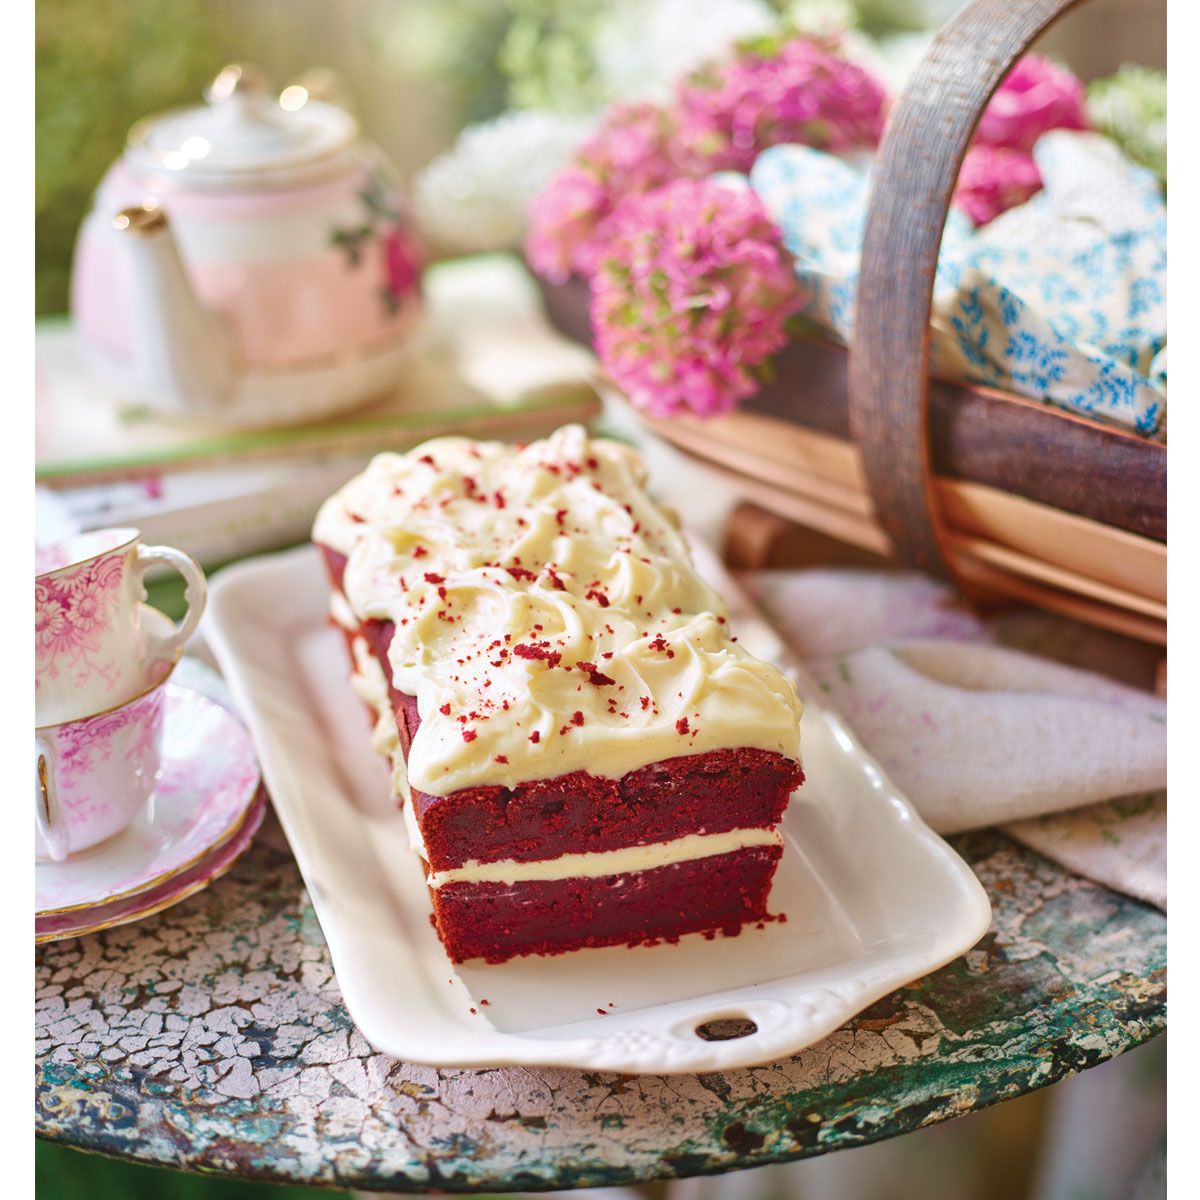 Beetroot and chocolate cake recipe - BBC Food